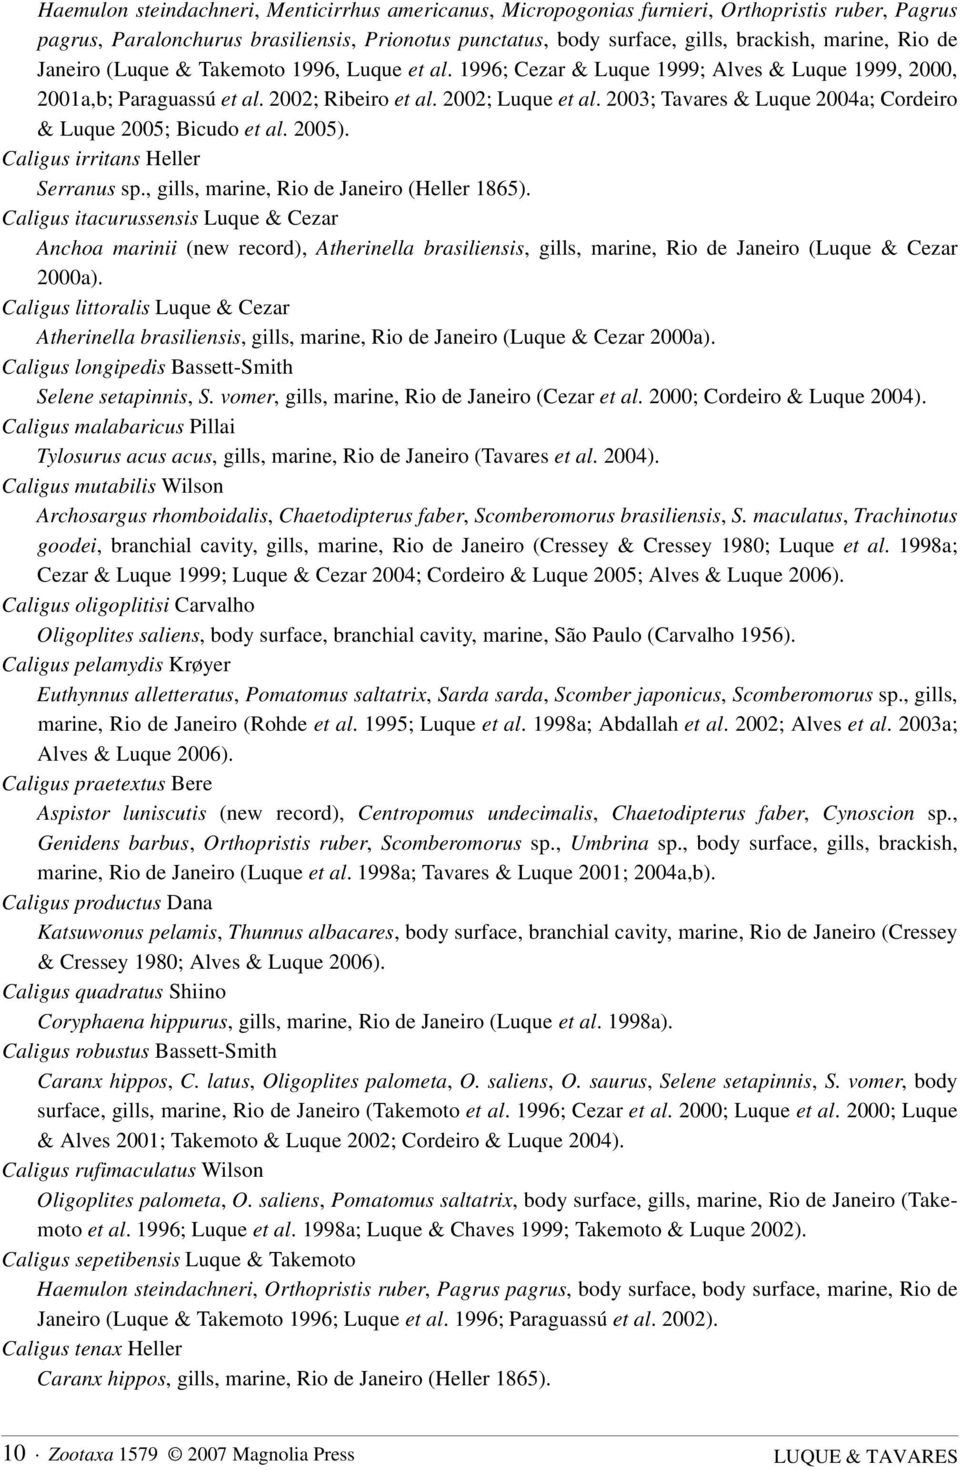 2003; Tavares & Luque 2004a; Cordeiro & Luque 2005; Bicudo et al. 2005). Caligus irritans Heller Serranus sp., gills, marine, Rio de Janeiro (Heller 1865).